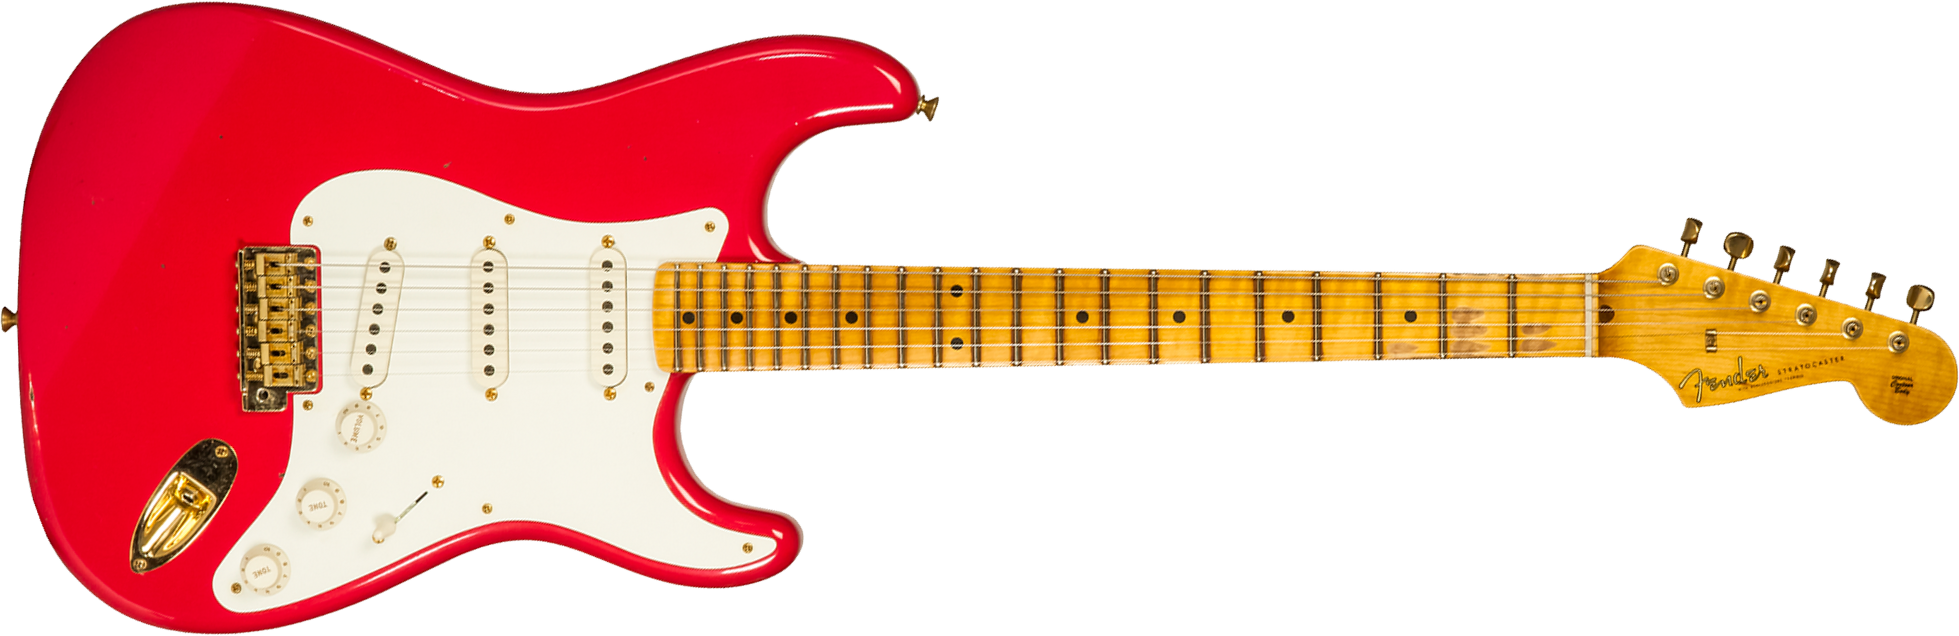 Fender Custom Shop Strat 1956 3s Trem Mn #r130433 - Journeyman Relic Fiesta Red - E-Gitarre in Str-Form - Main picture